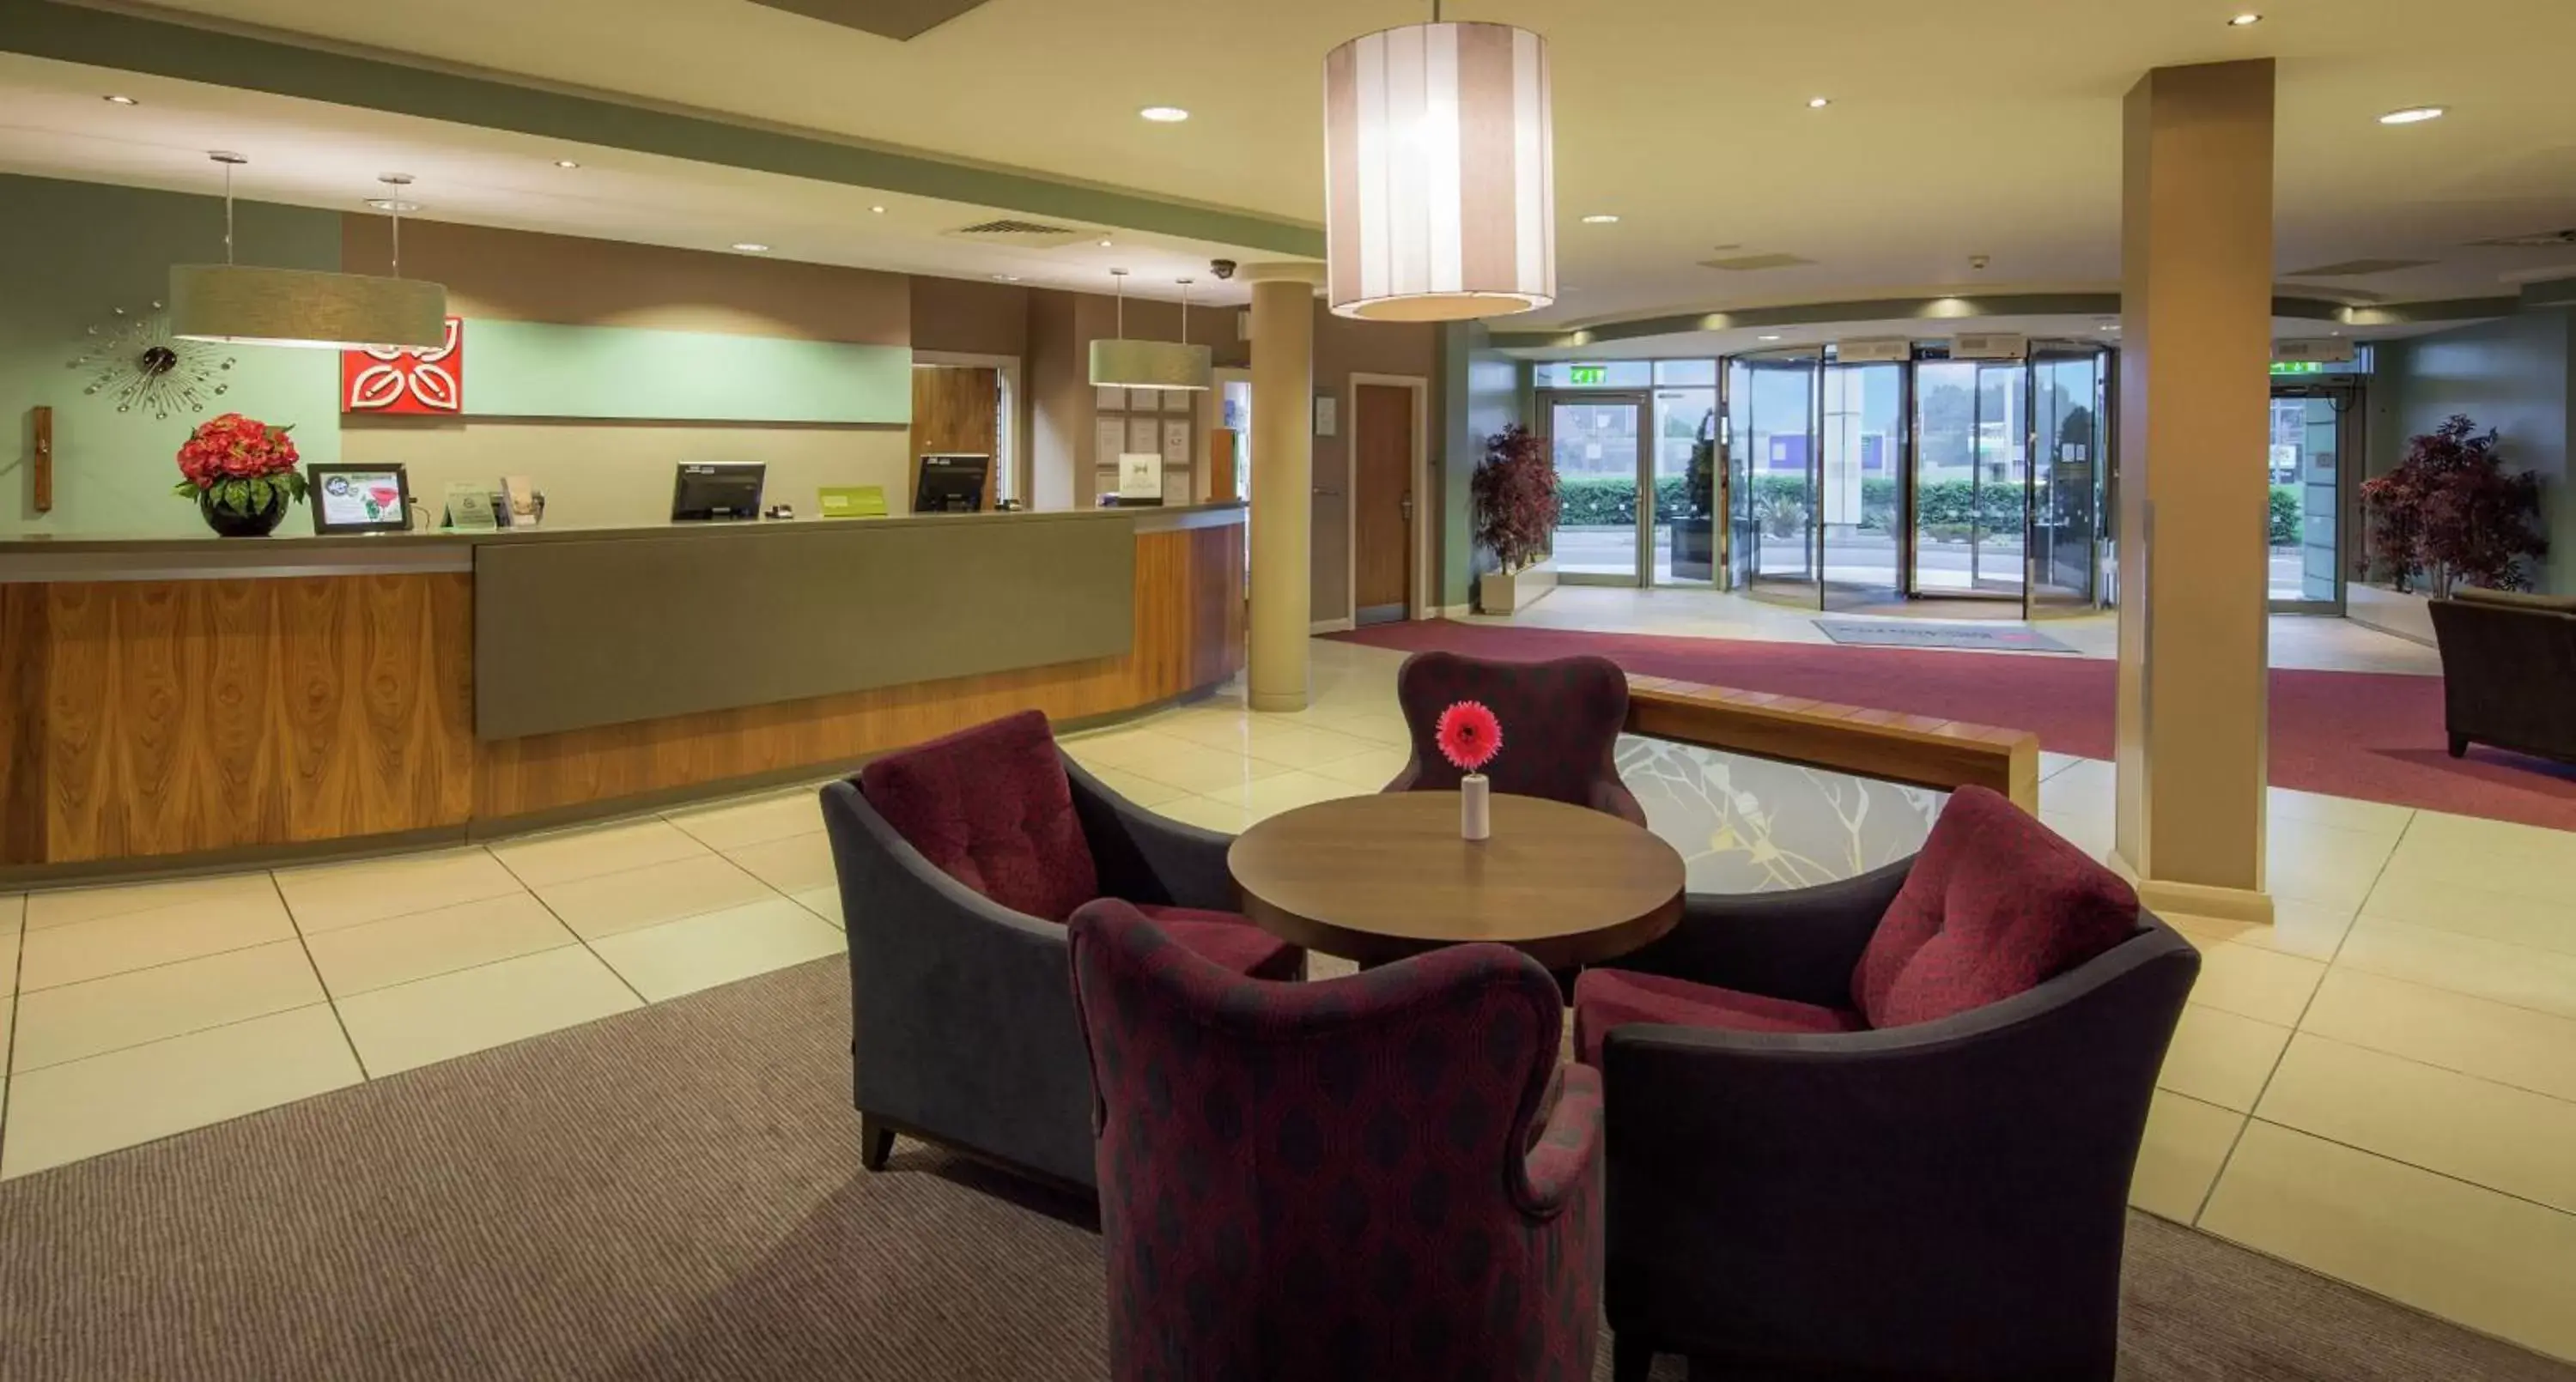 Lobby or reception in Hilton Garden Inn Luton North